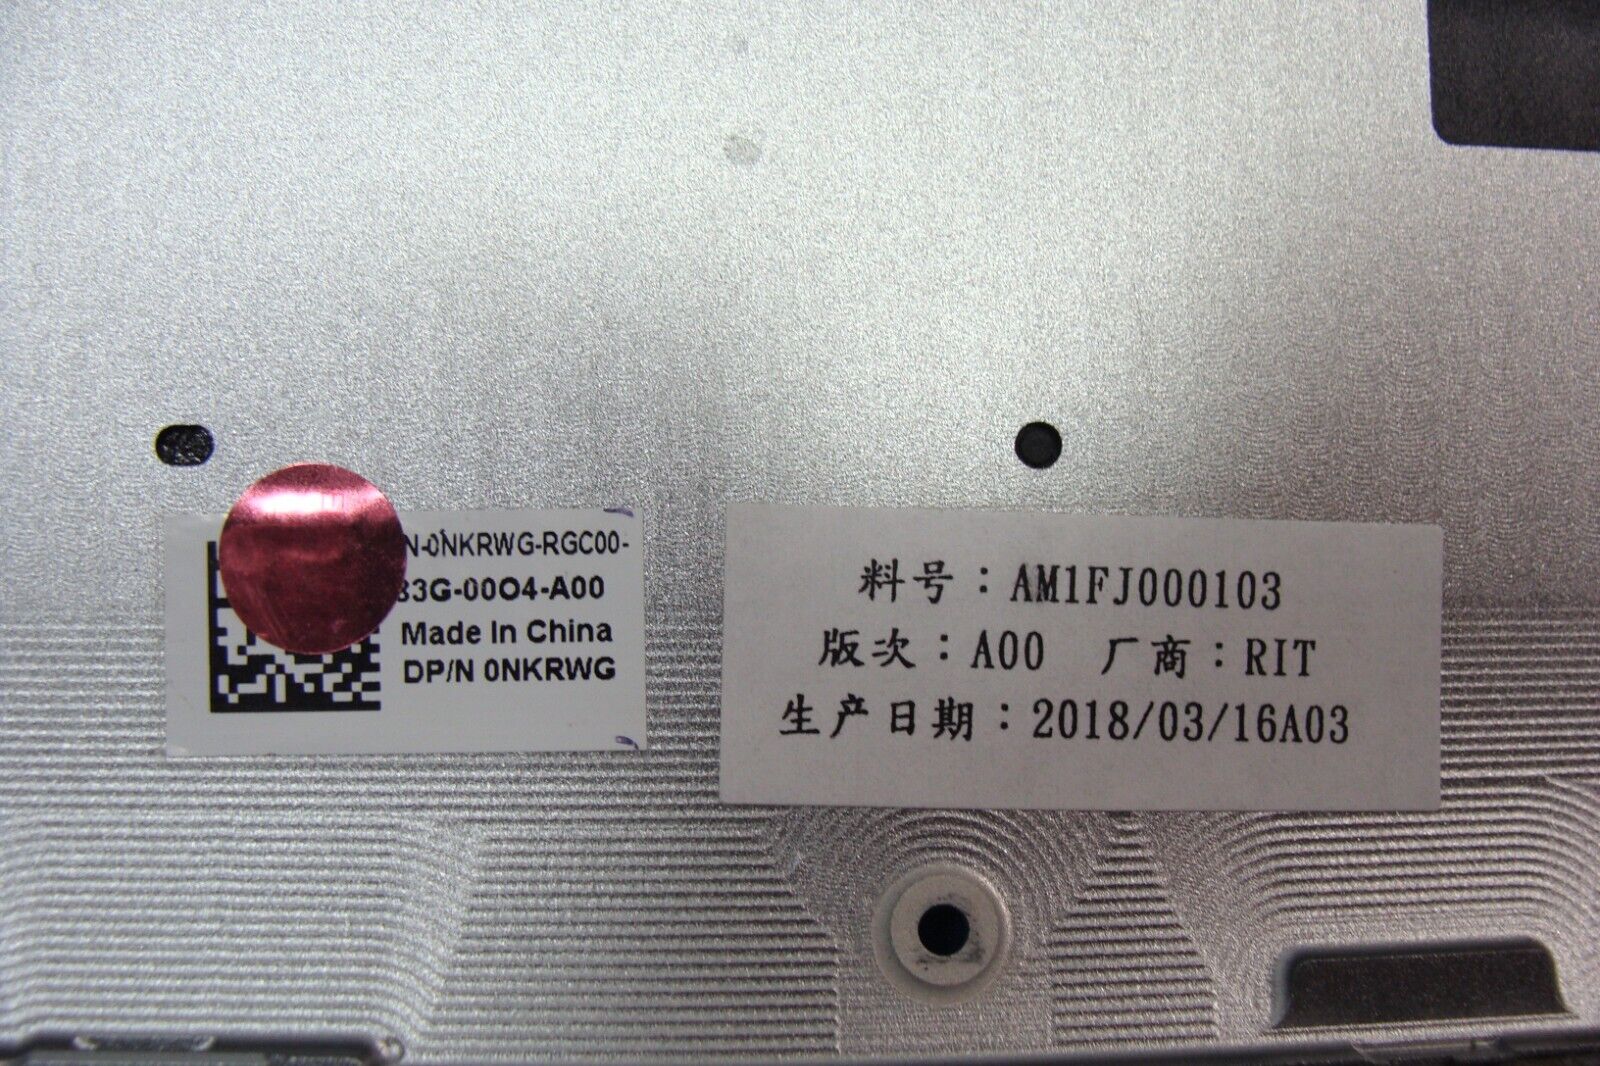 Dell XPS 13.3” 13 9360 Genuine Laptop Bottom Case Base Cover NKRWG AM1FJ000103